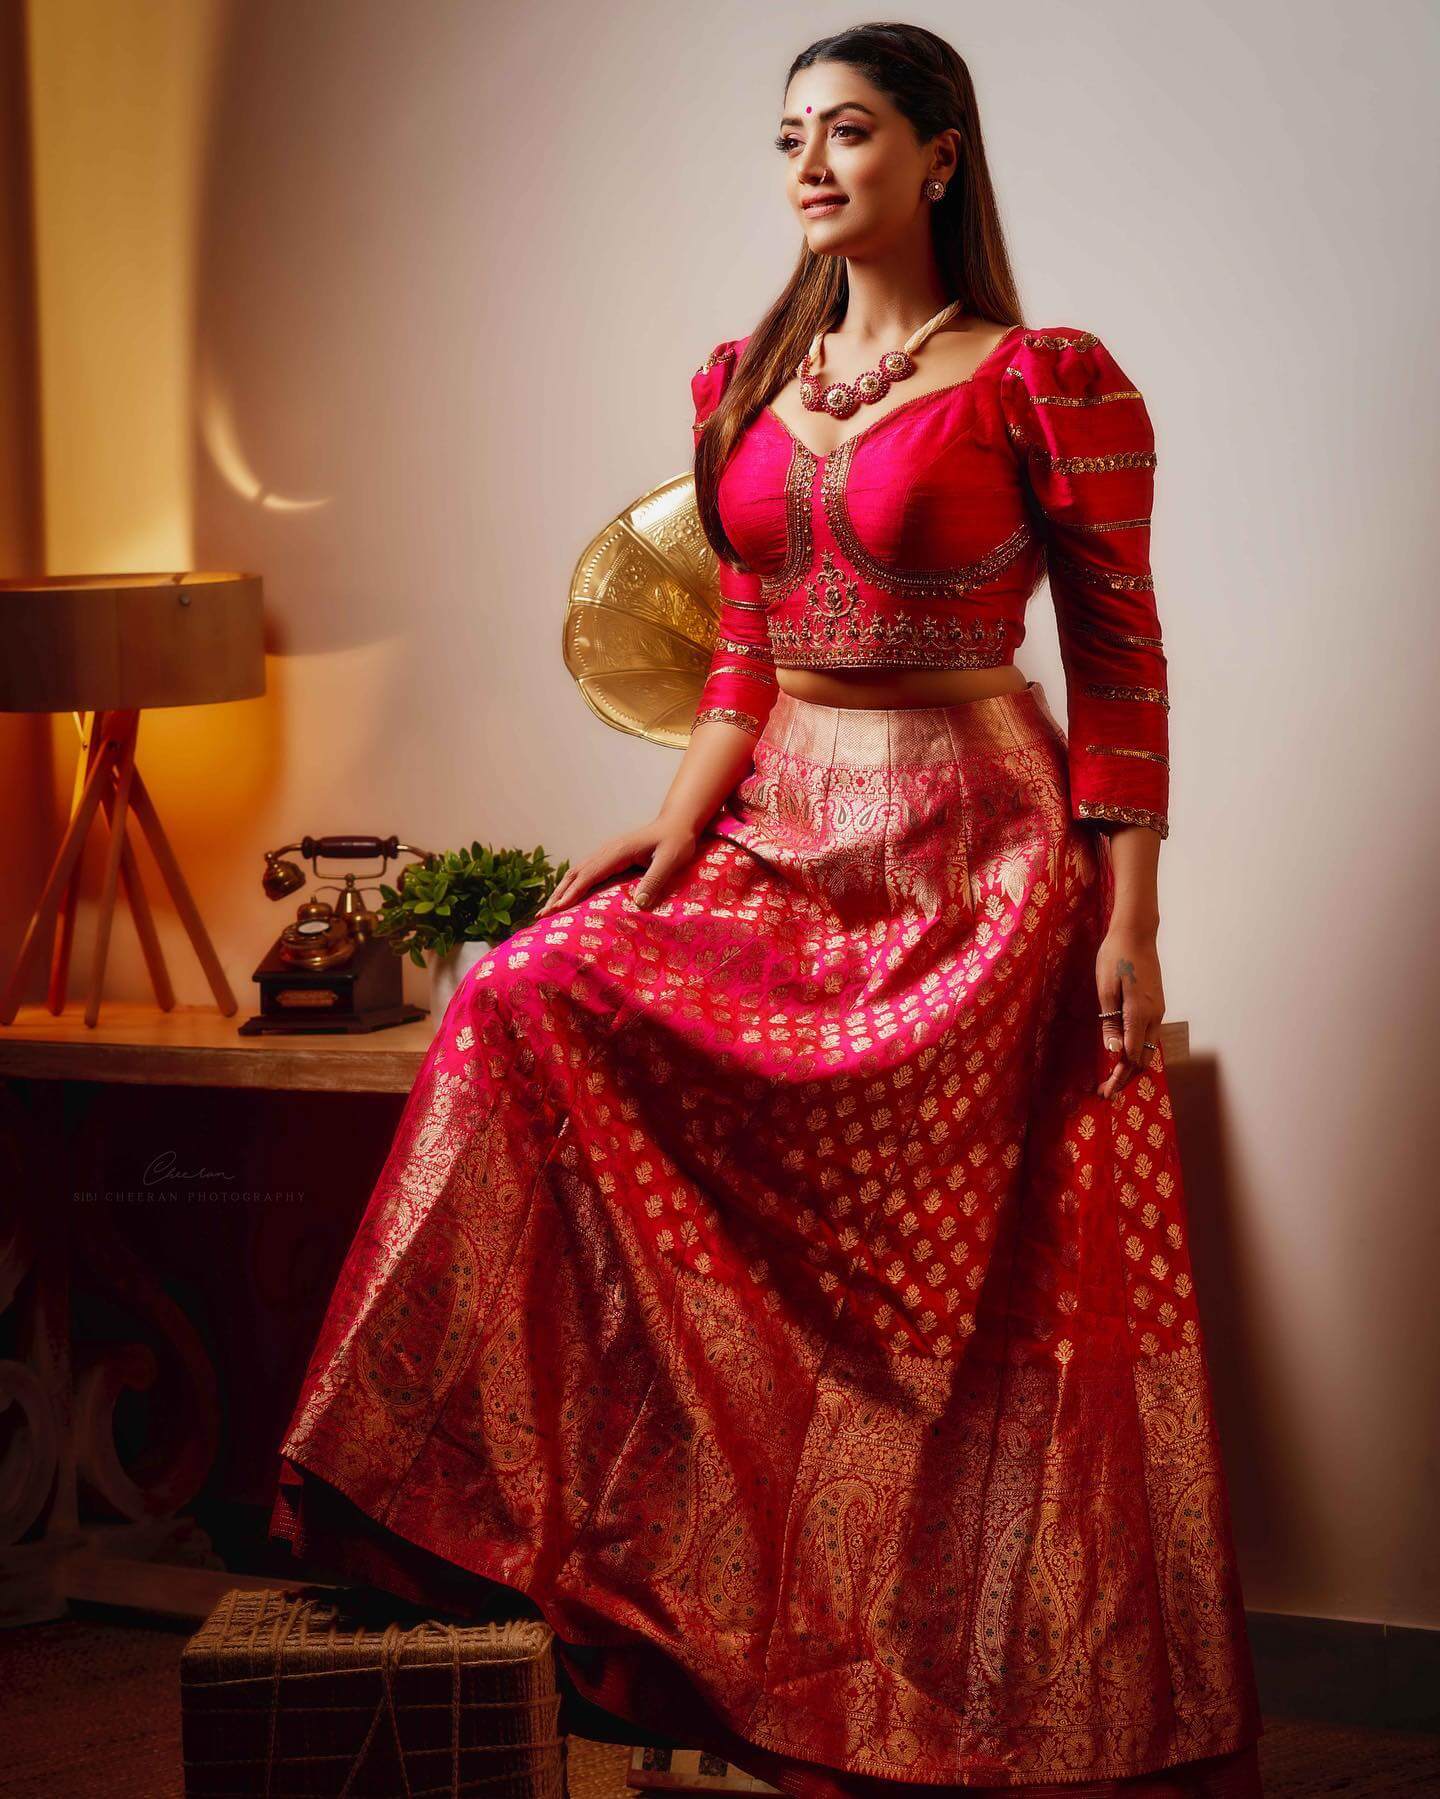 Mamta Mohandas Divine Look In Red Silk Lehenga Set